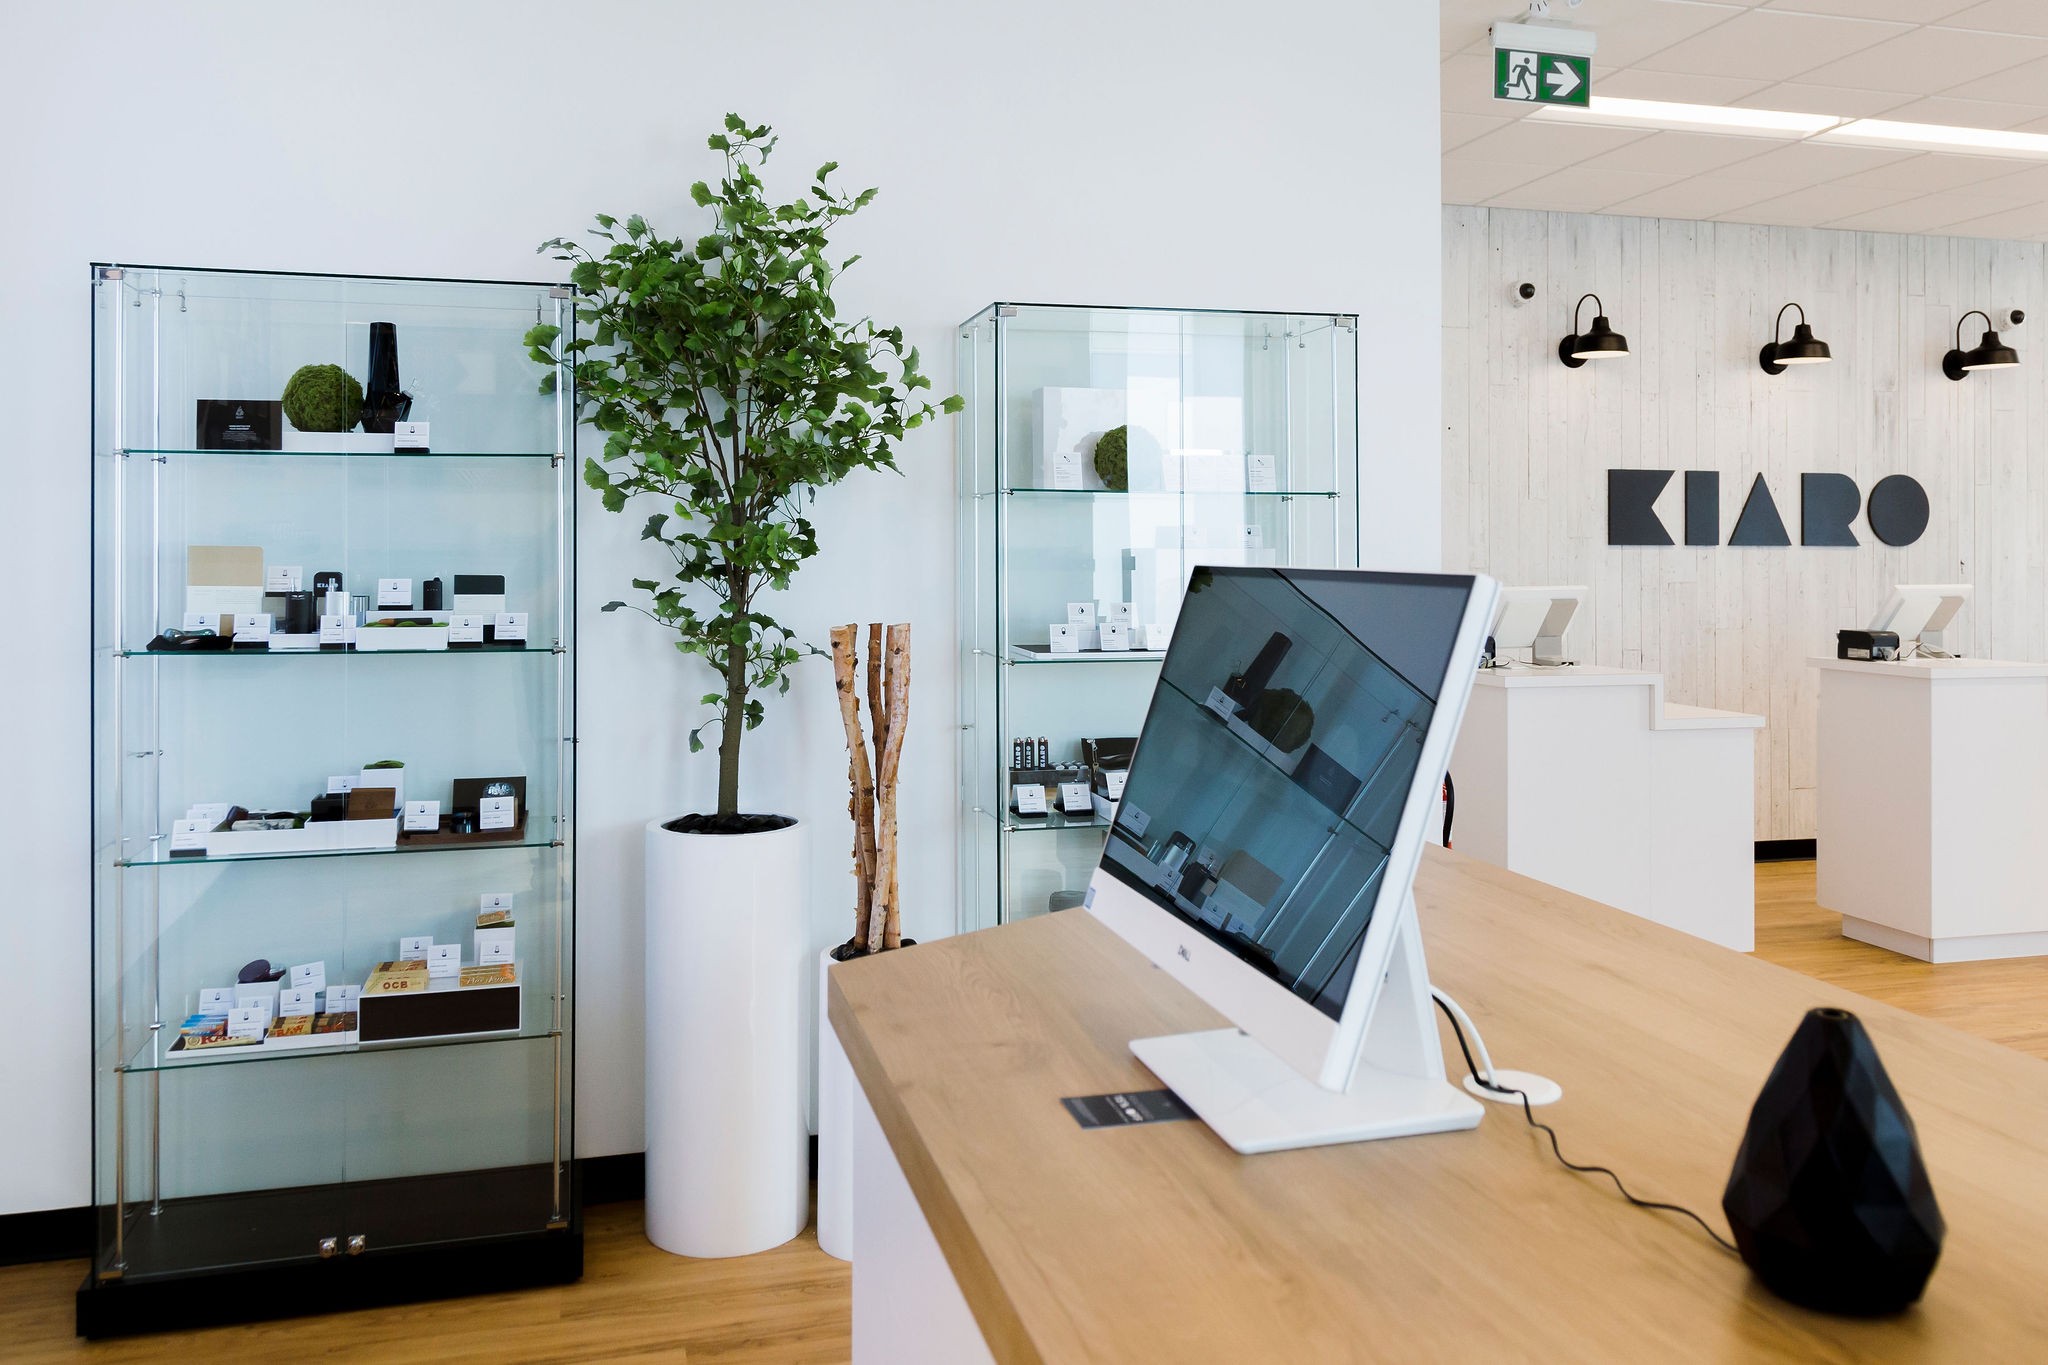 Kiaro cannabis store showing customer product kiosks, display units, branded wall, desks, and bright interior